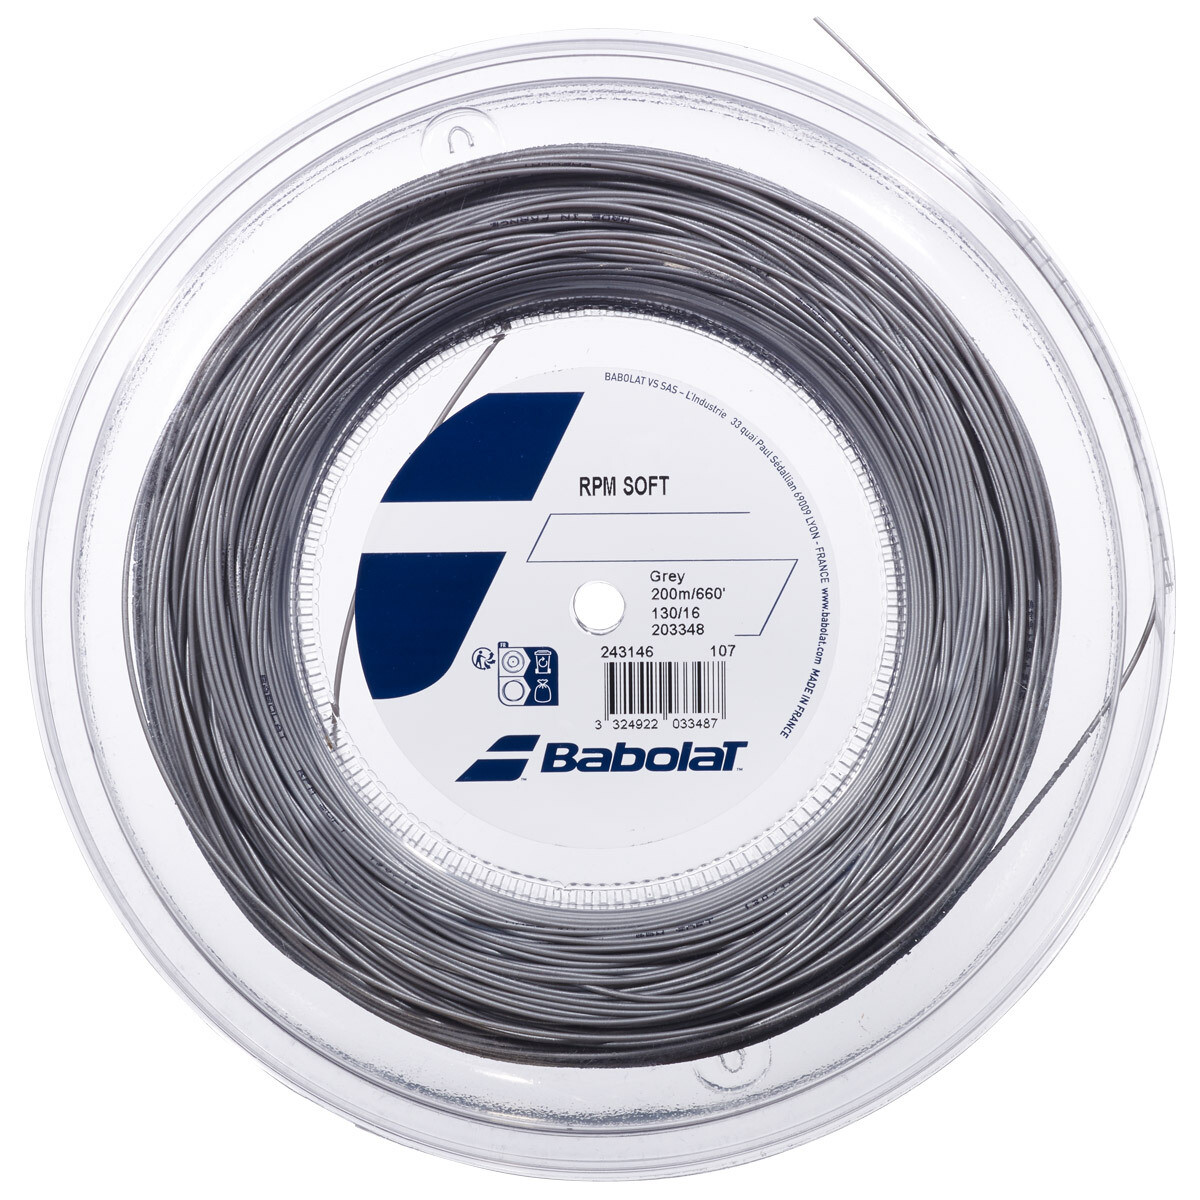 Babolat RPM Soft Tennis String 200m Reel - Grey